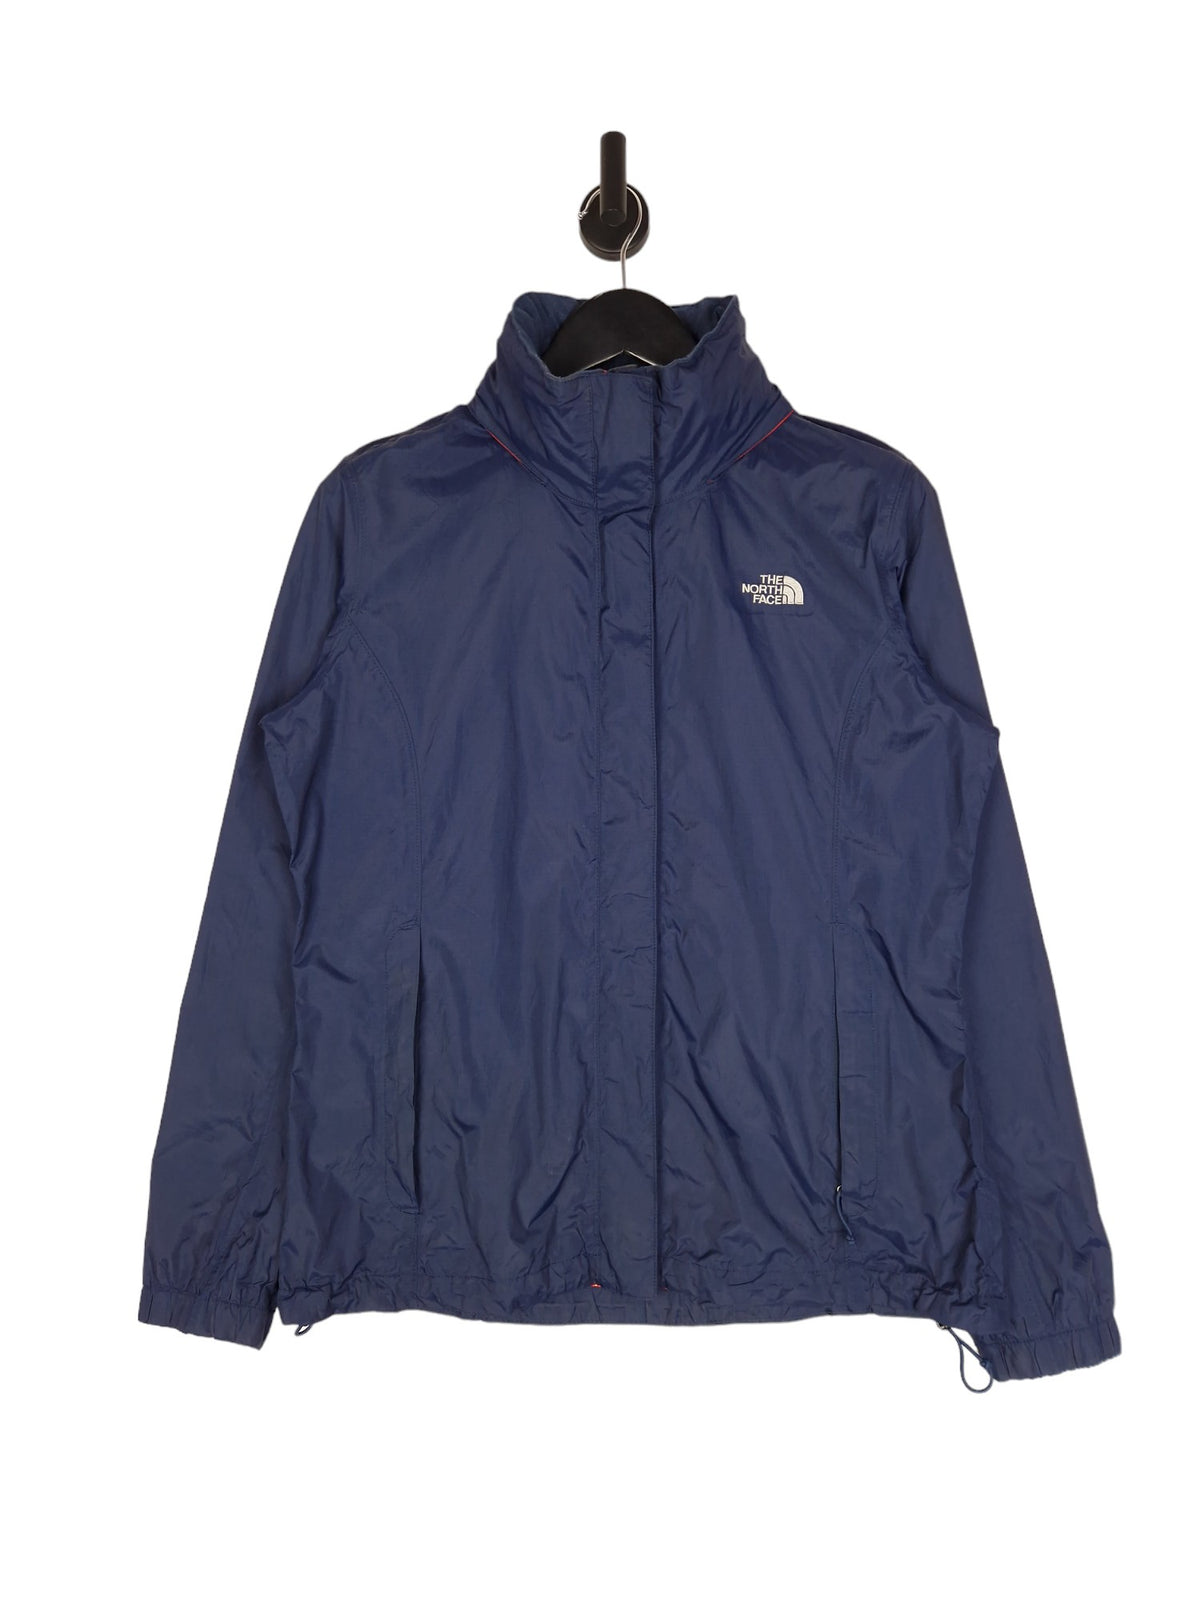 The North Face Hyvent Rain Jacket - Size L UK 12